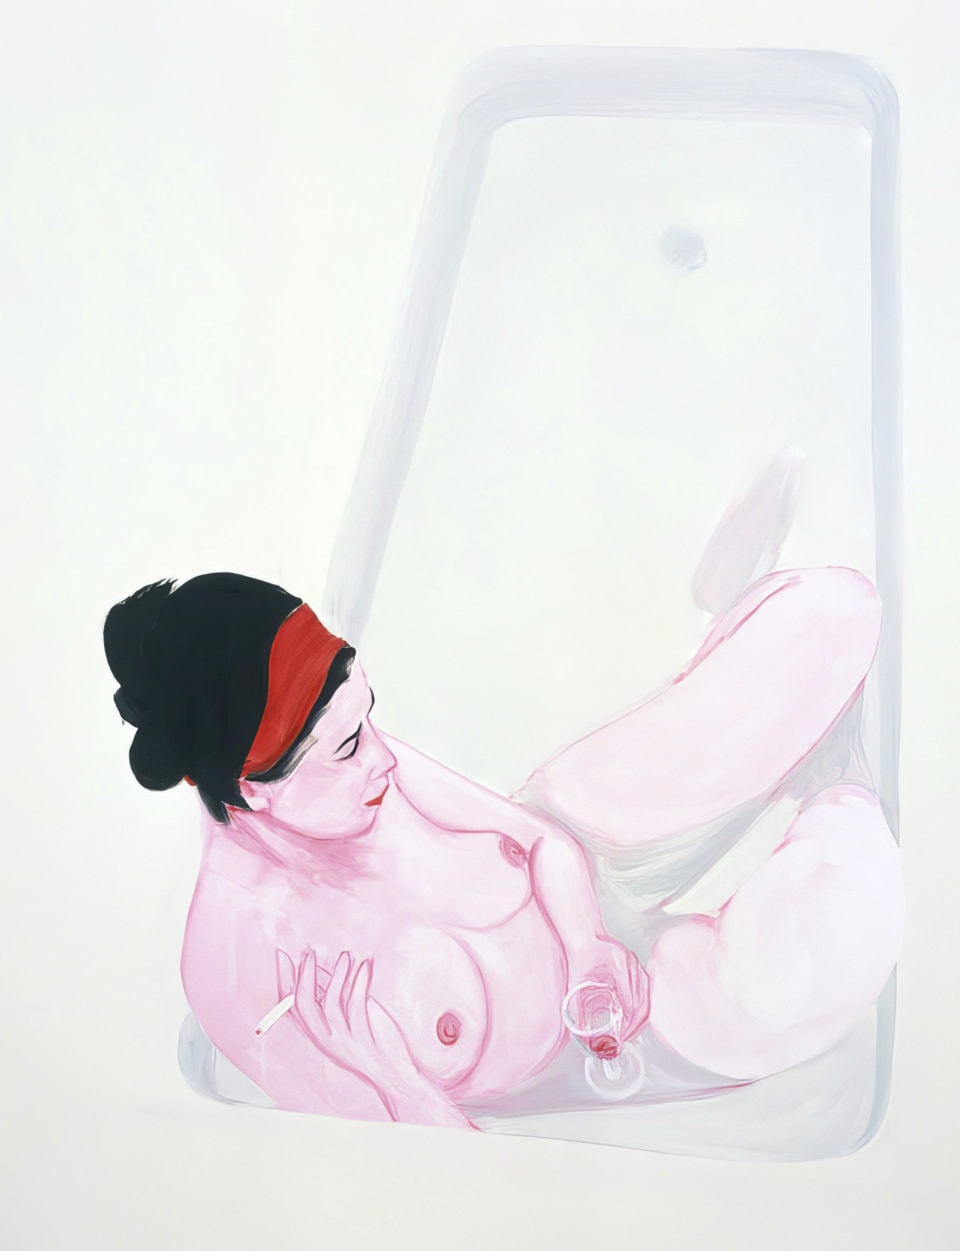 Deborah in her bath 2006 huile et glycero sur toile oil and glycero on canvas 116x89 cm